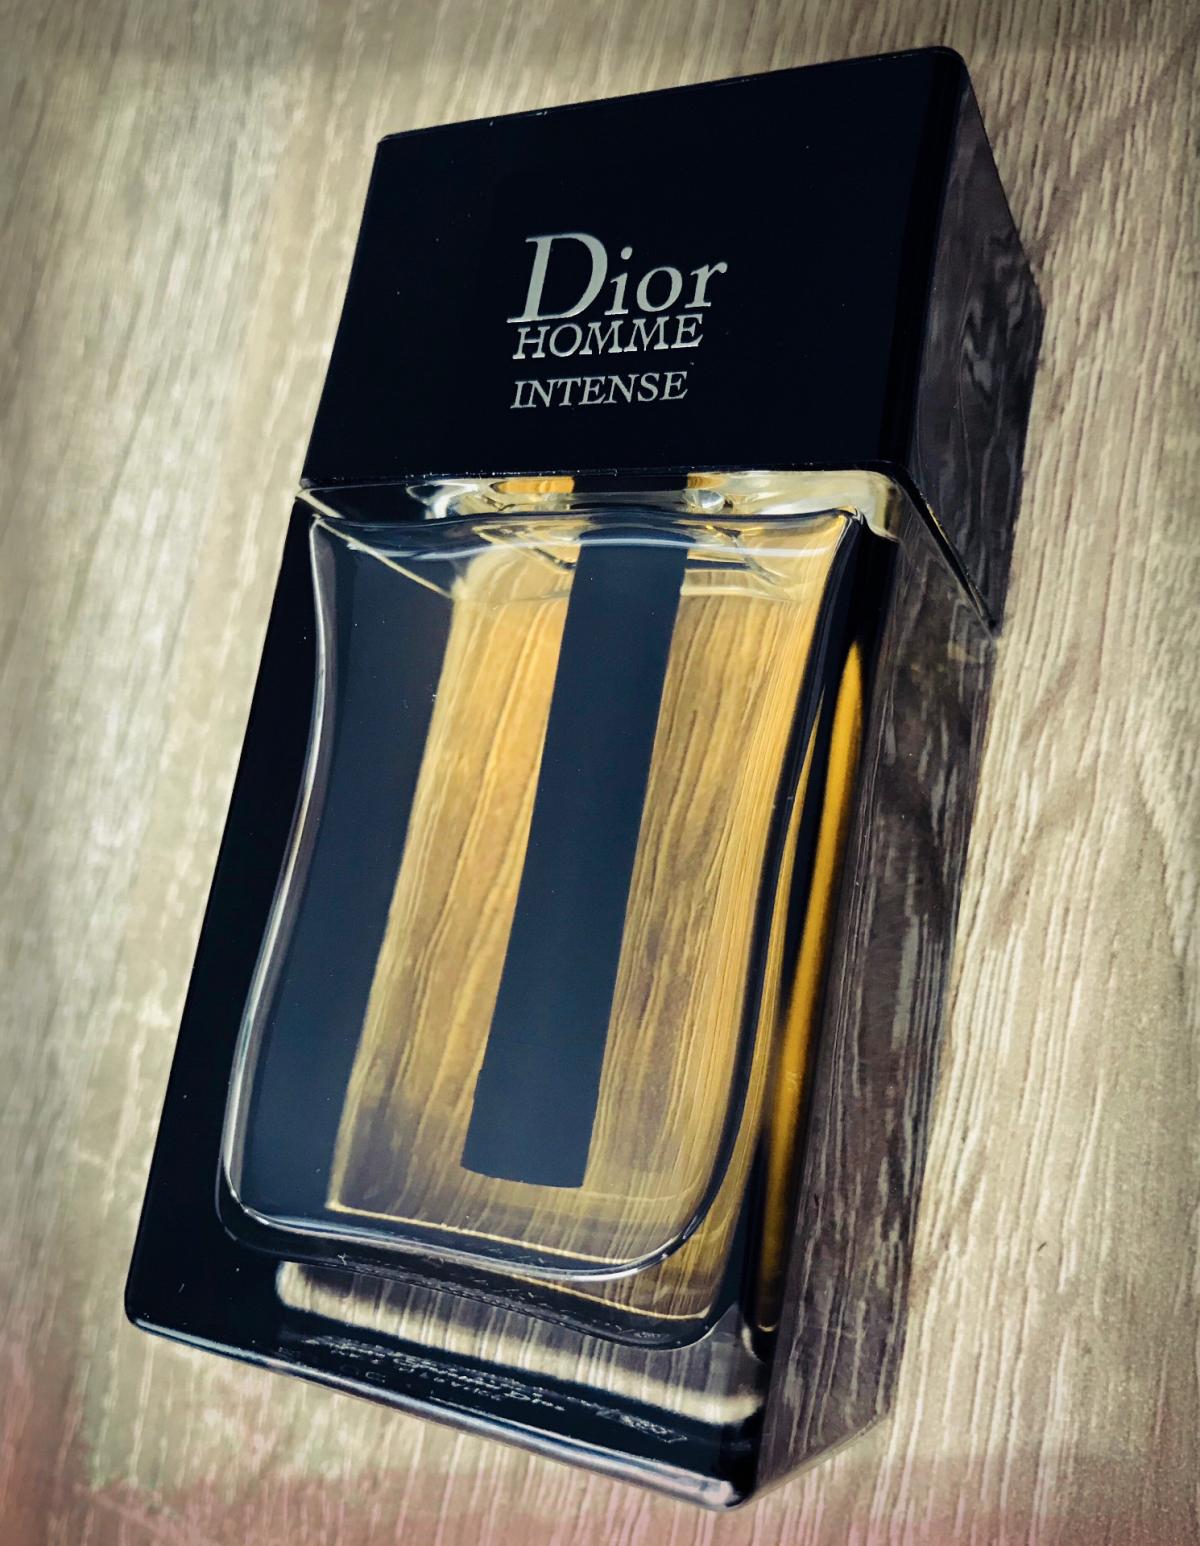 Dior Homme Intense 2011 Christian Dior cologne - a fragrance for men 2011